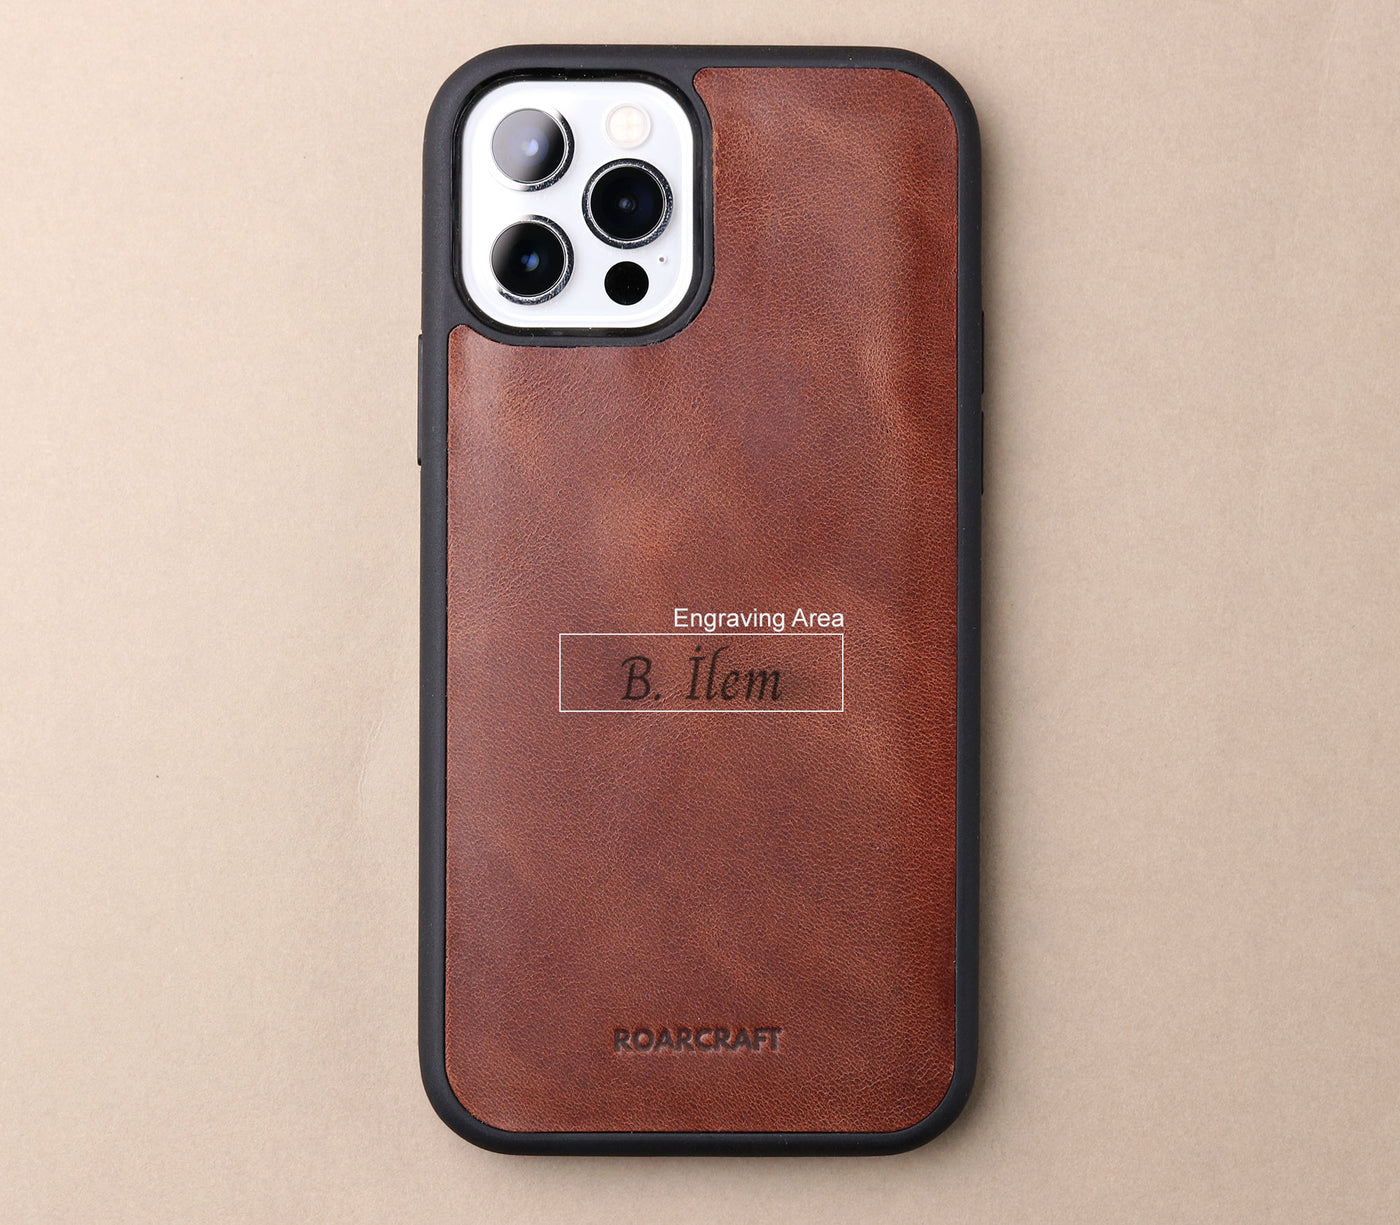 Nomad Rugged Leather Case iPhone 12 Pro Max Black